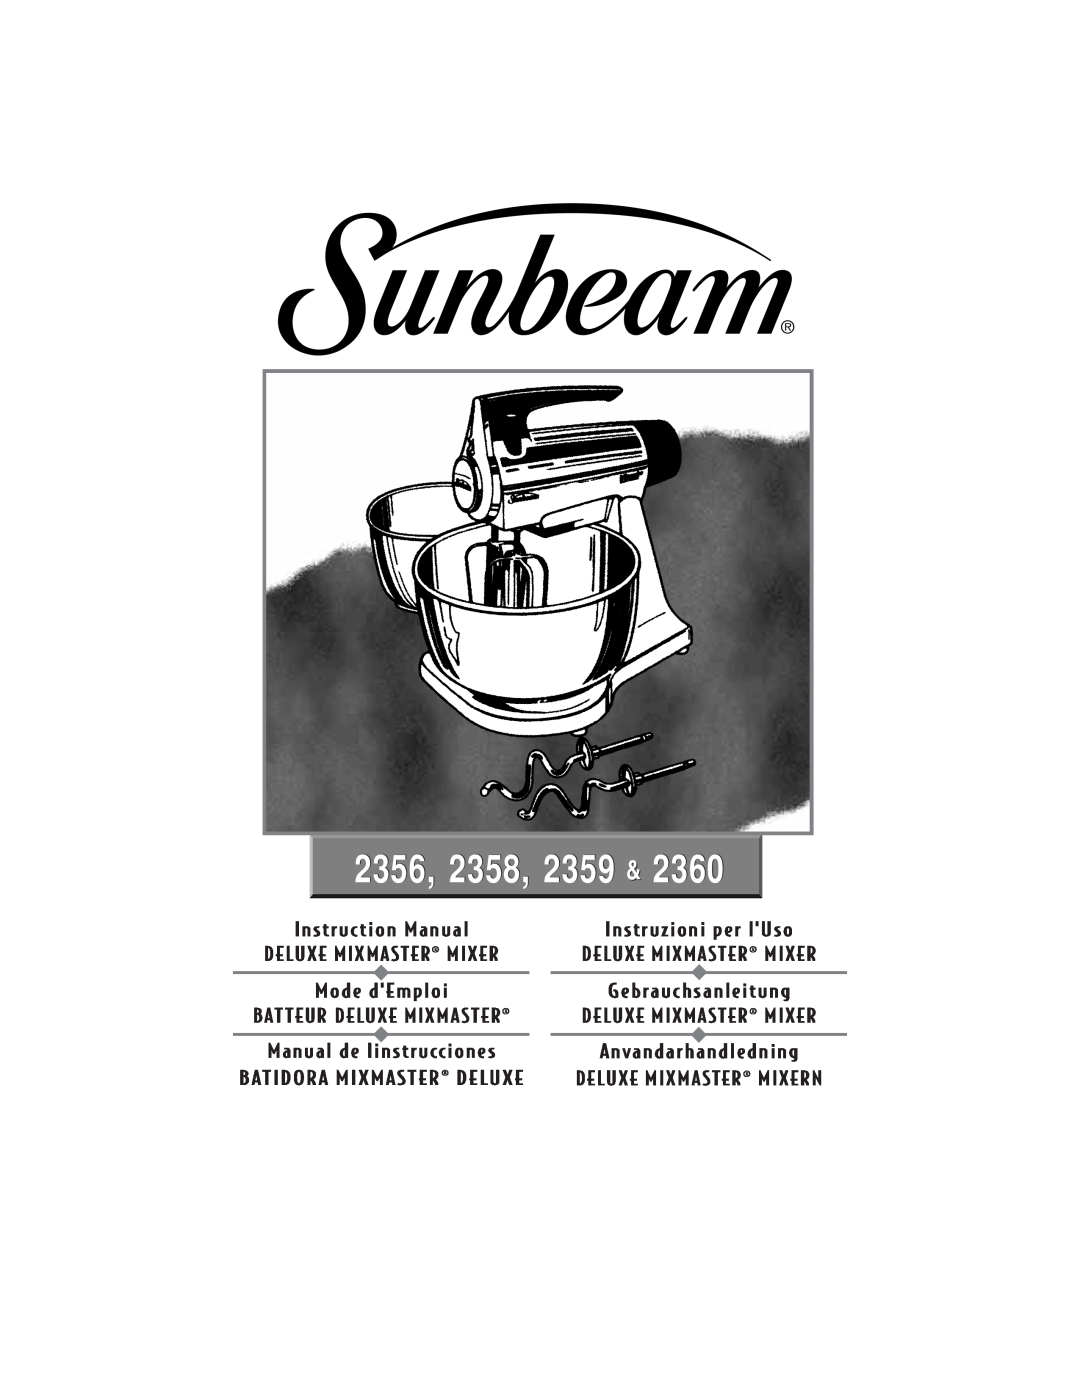 Sunbeam 2360, 2359 instruction manual 2356, 2358, Instruction Manual, Instruzioni per lUso, Deluxe Mixmaster ¨ Mixer 